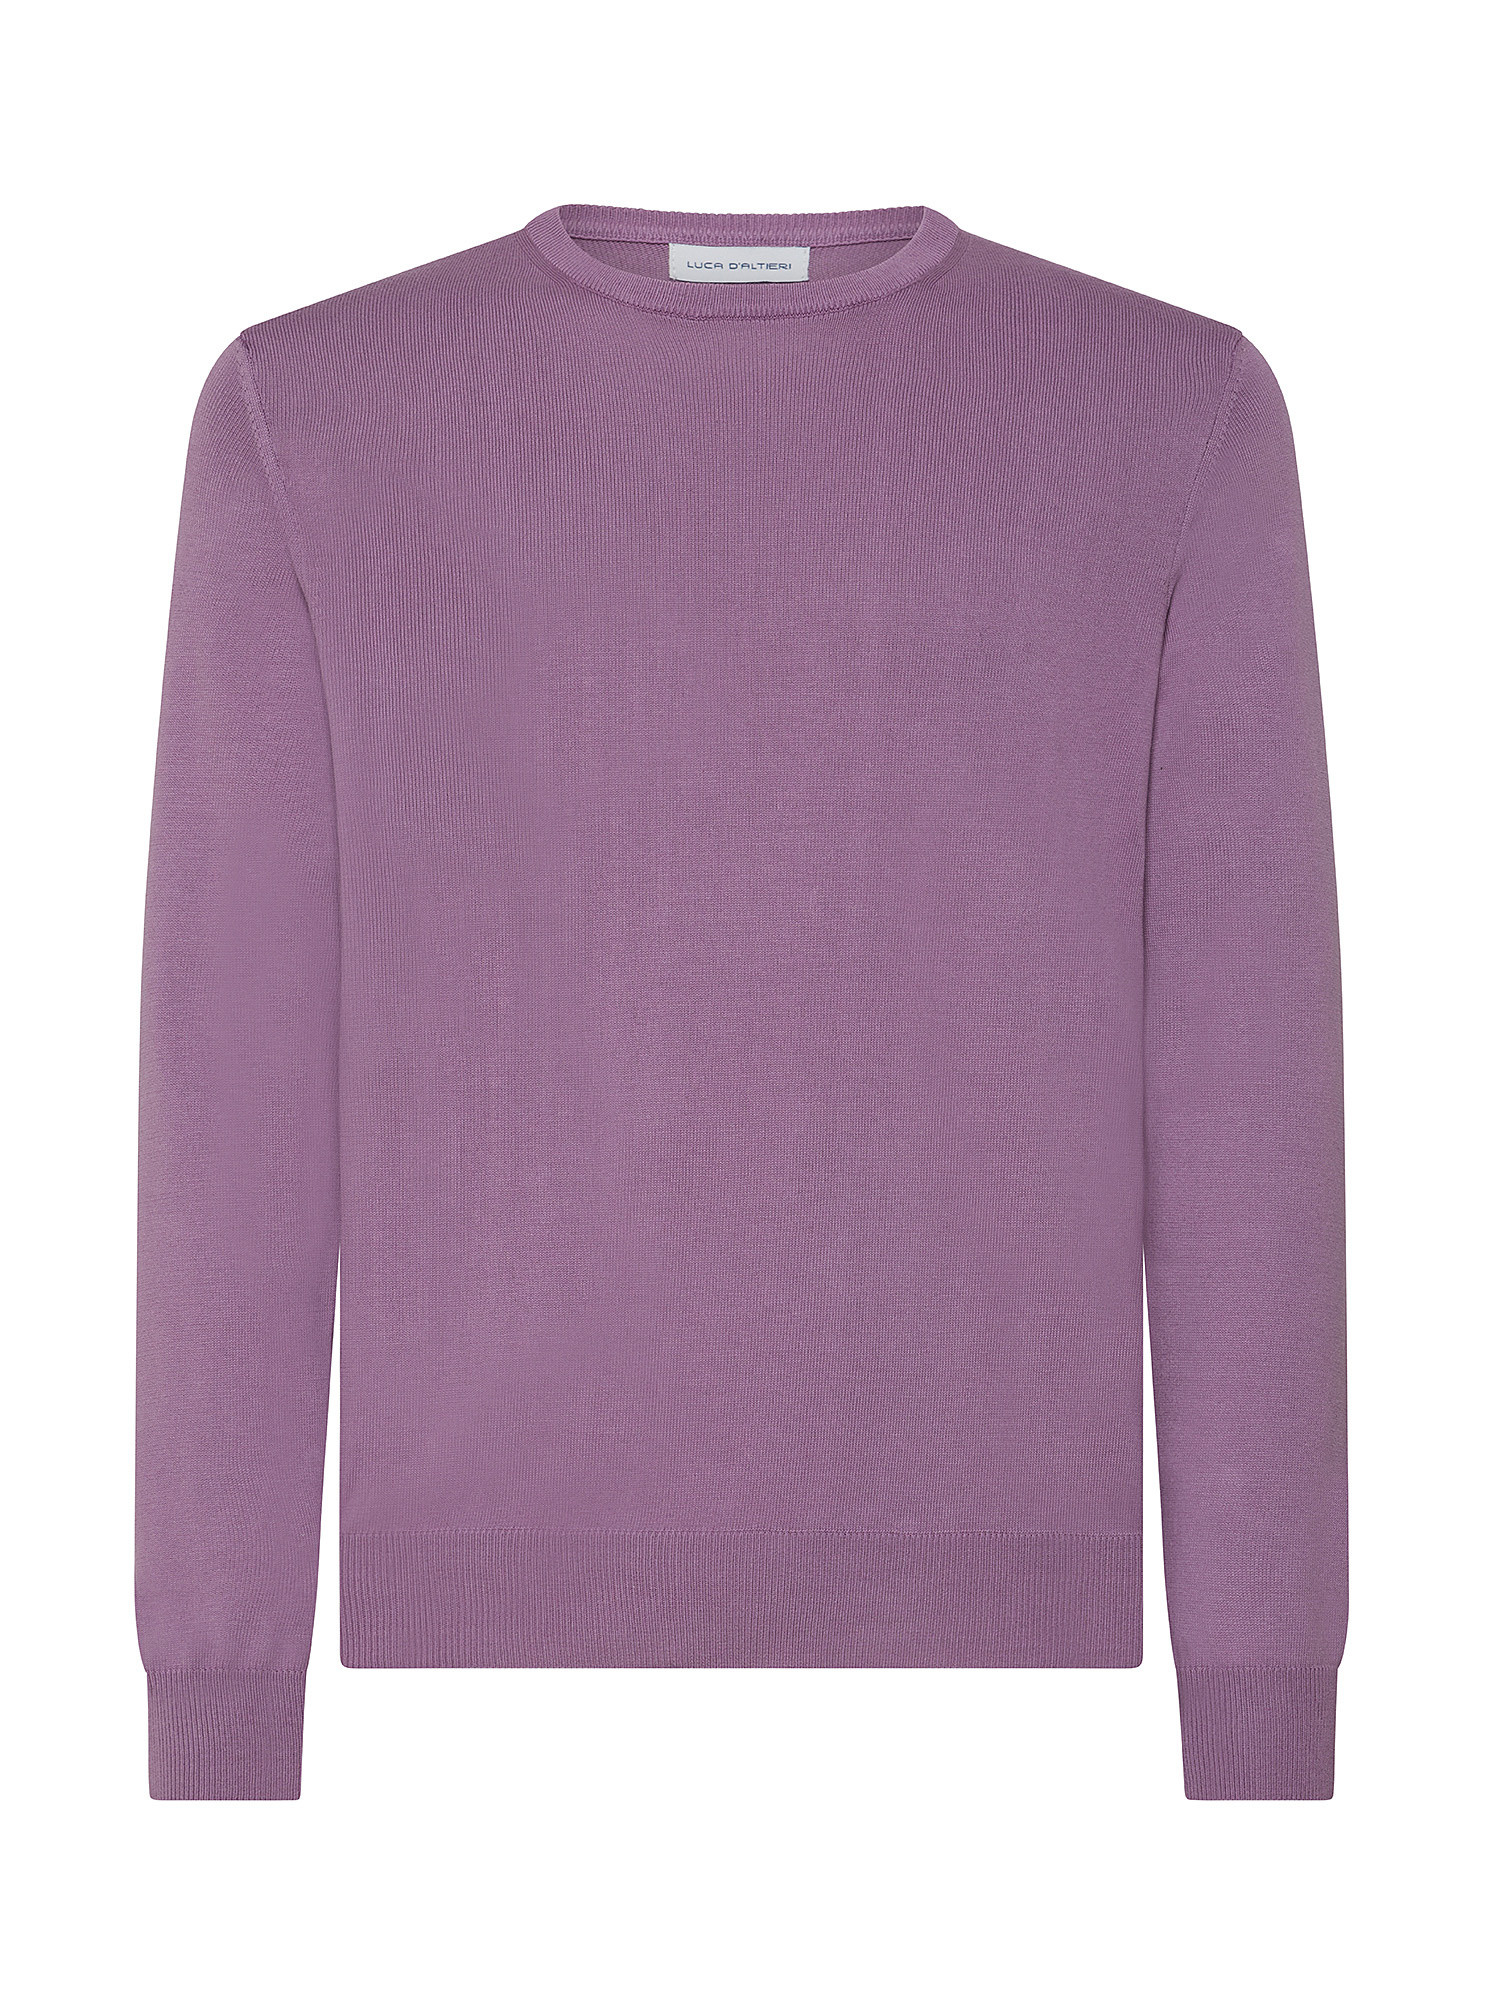 Luca D'Altieri - Crew neck sweater in extrafine pure cotton, Purple Lilac, large image number 0